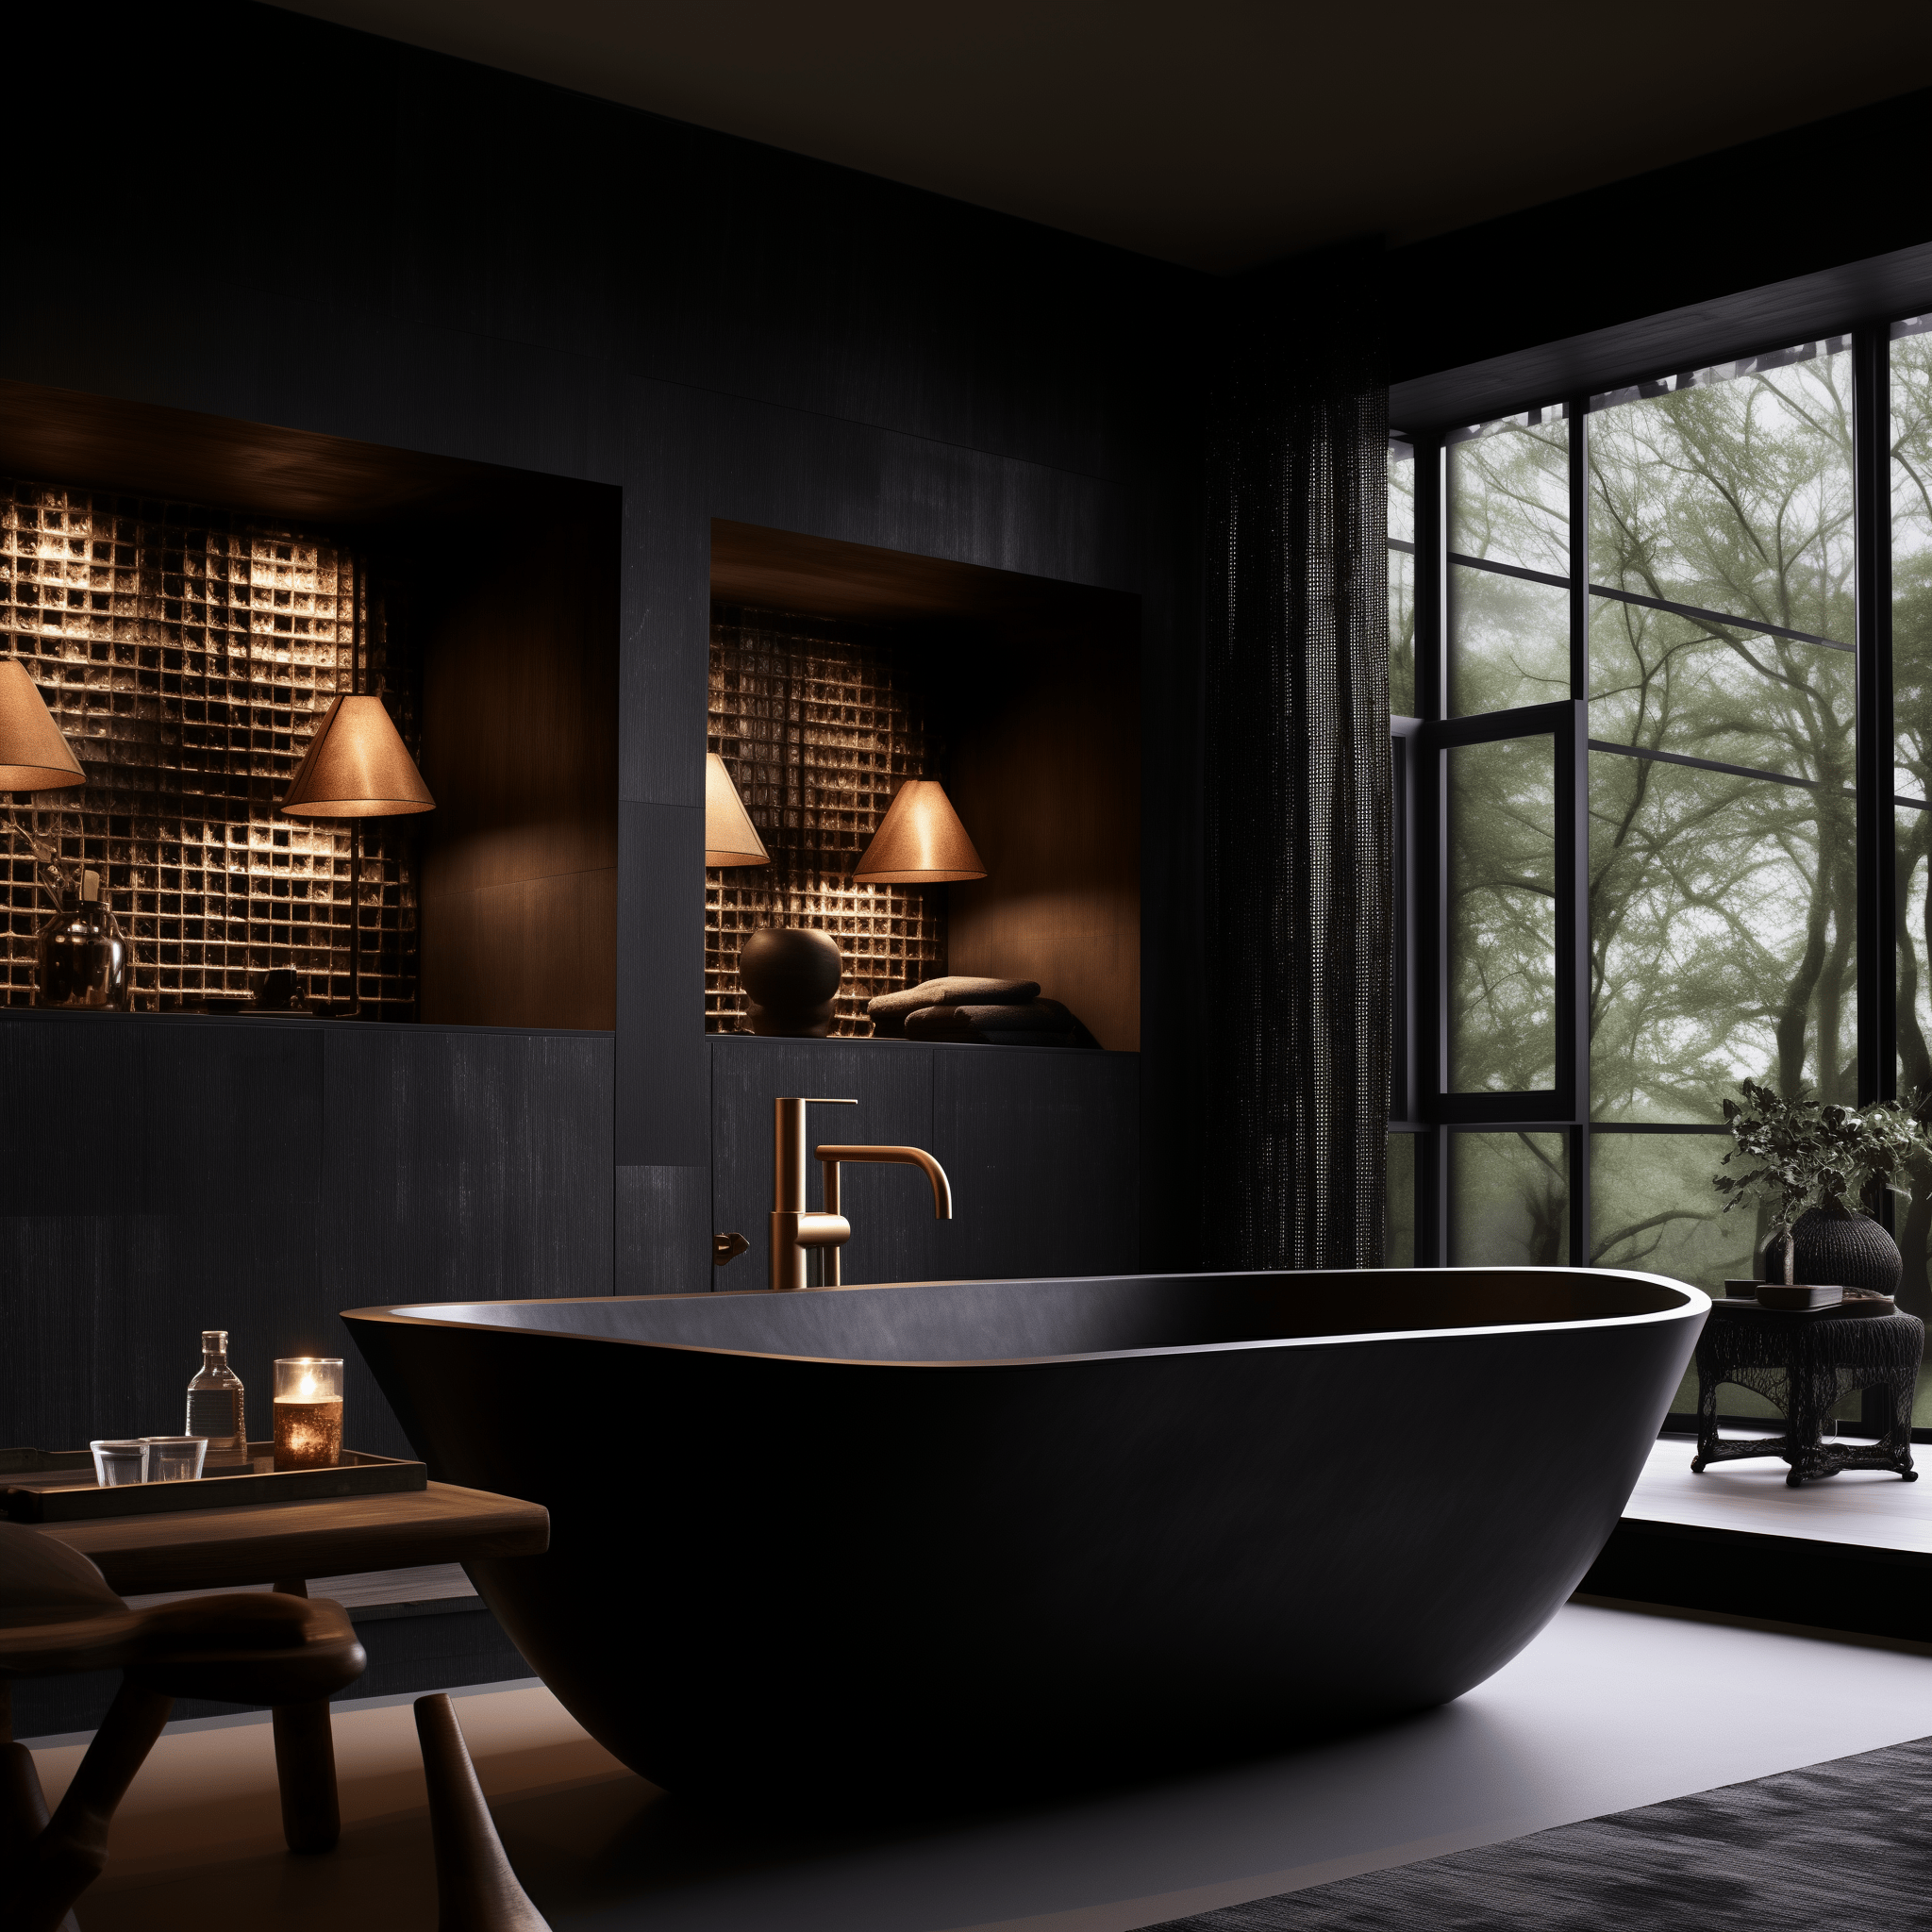 dark bathroom aesthetic decor design ideas luxury cozy colors